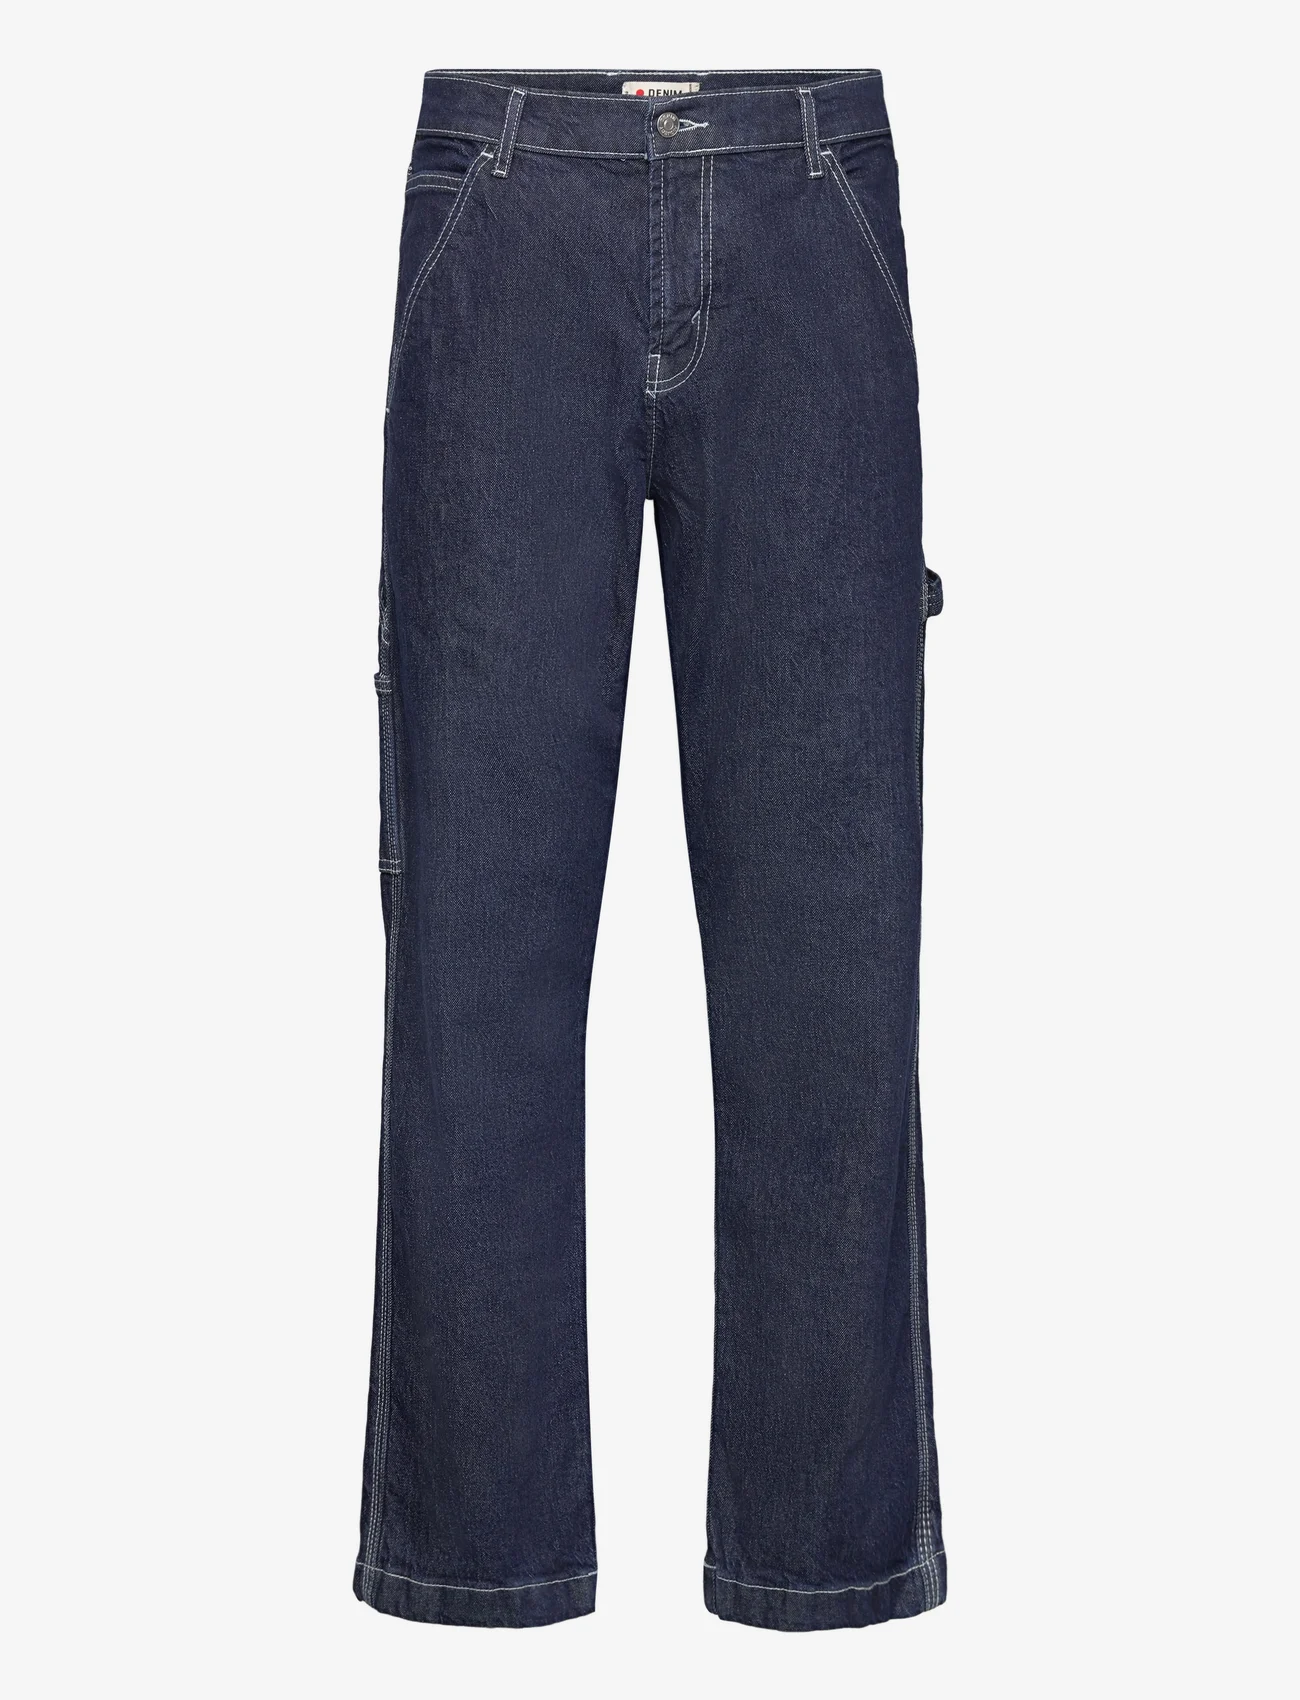 Denim project - DPWorkwear Straight Jeans - regular jeans - dark blue rinse - 0